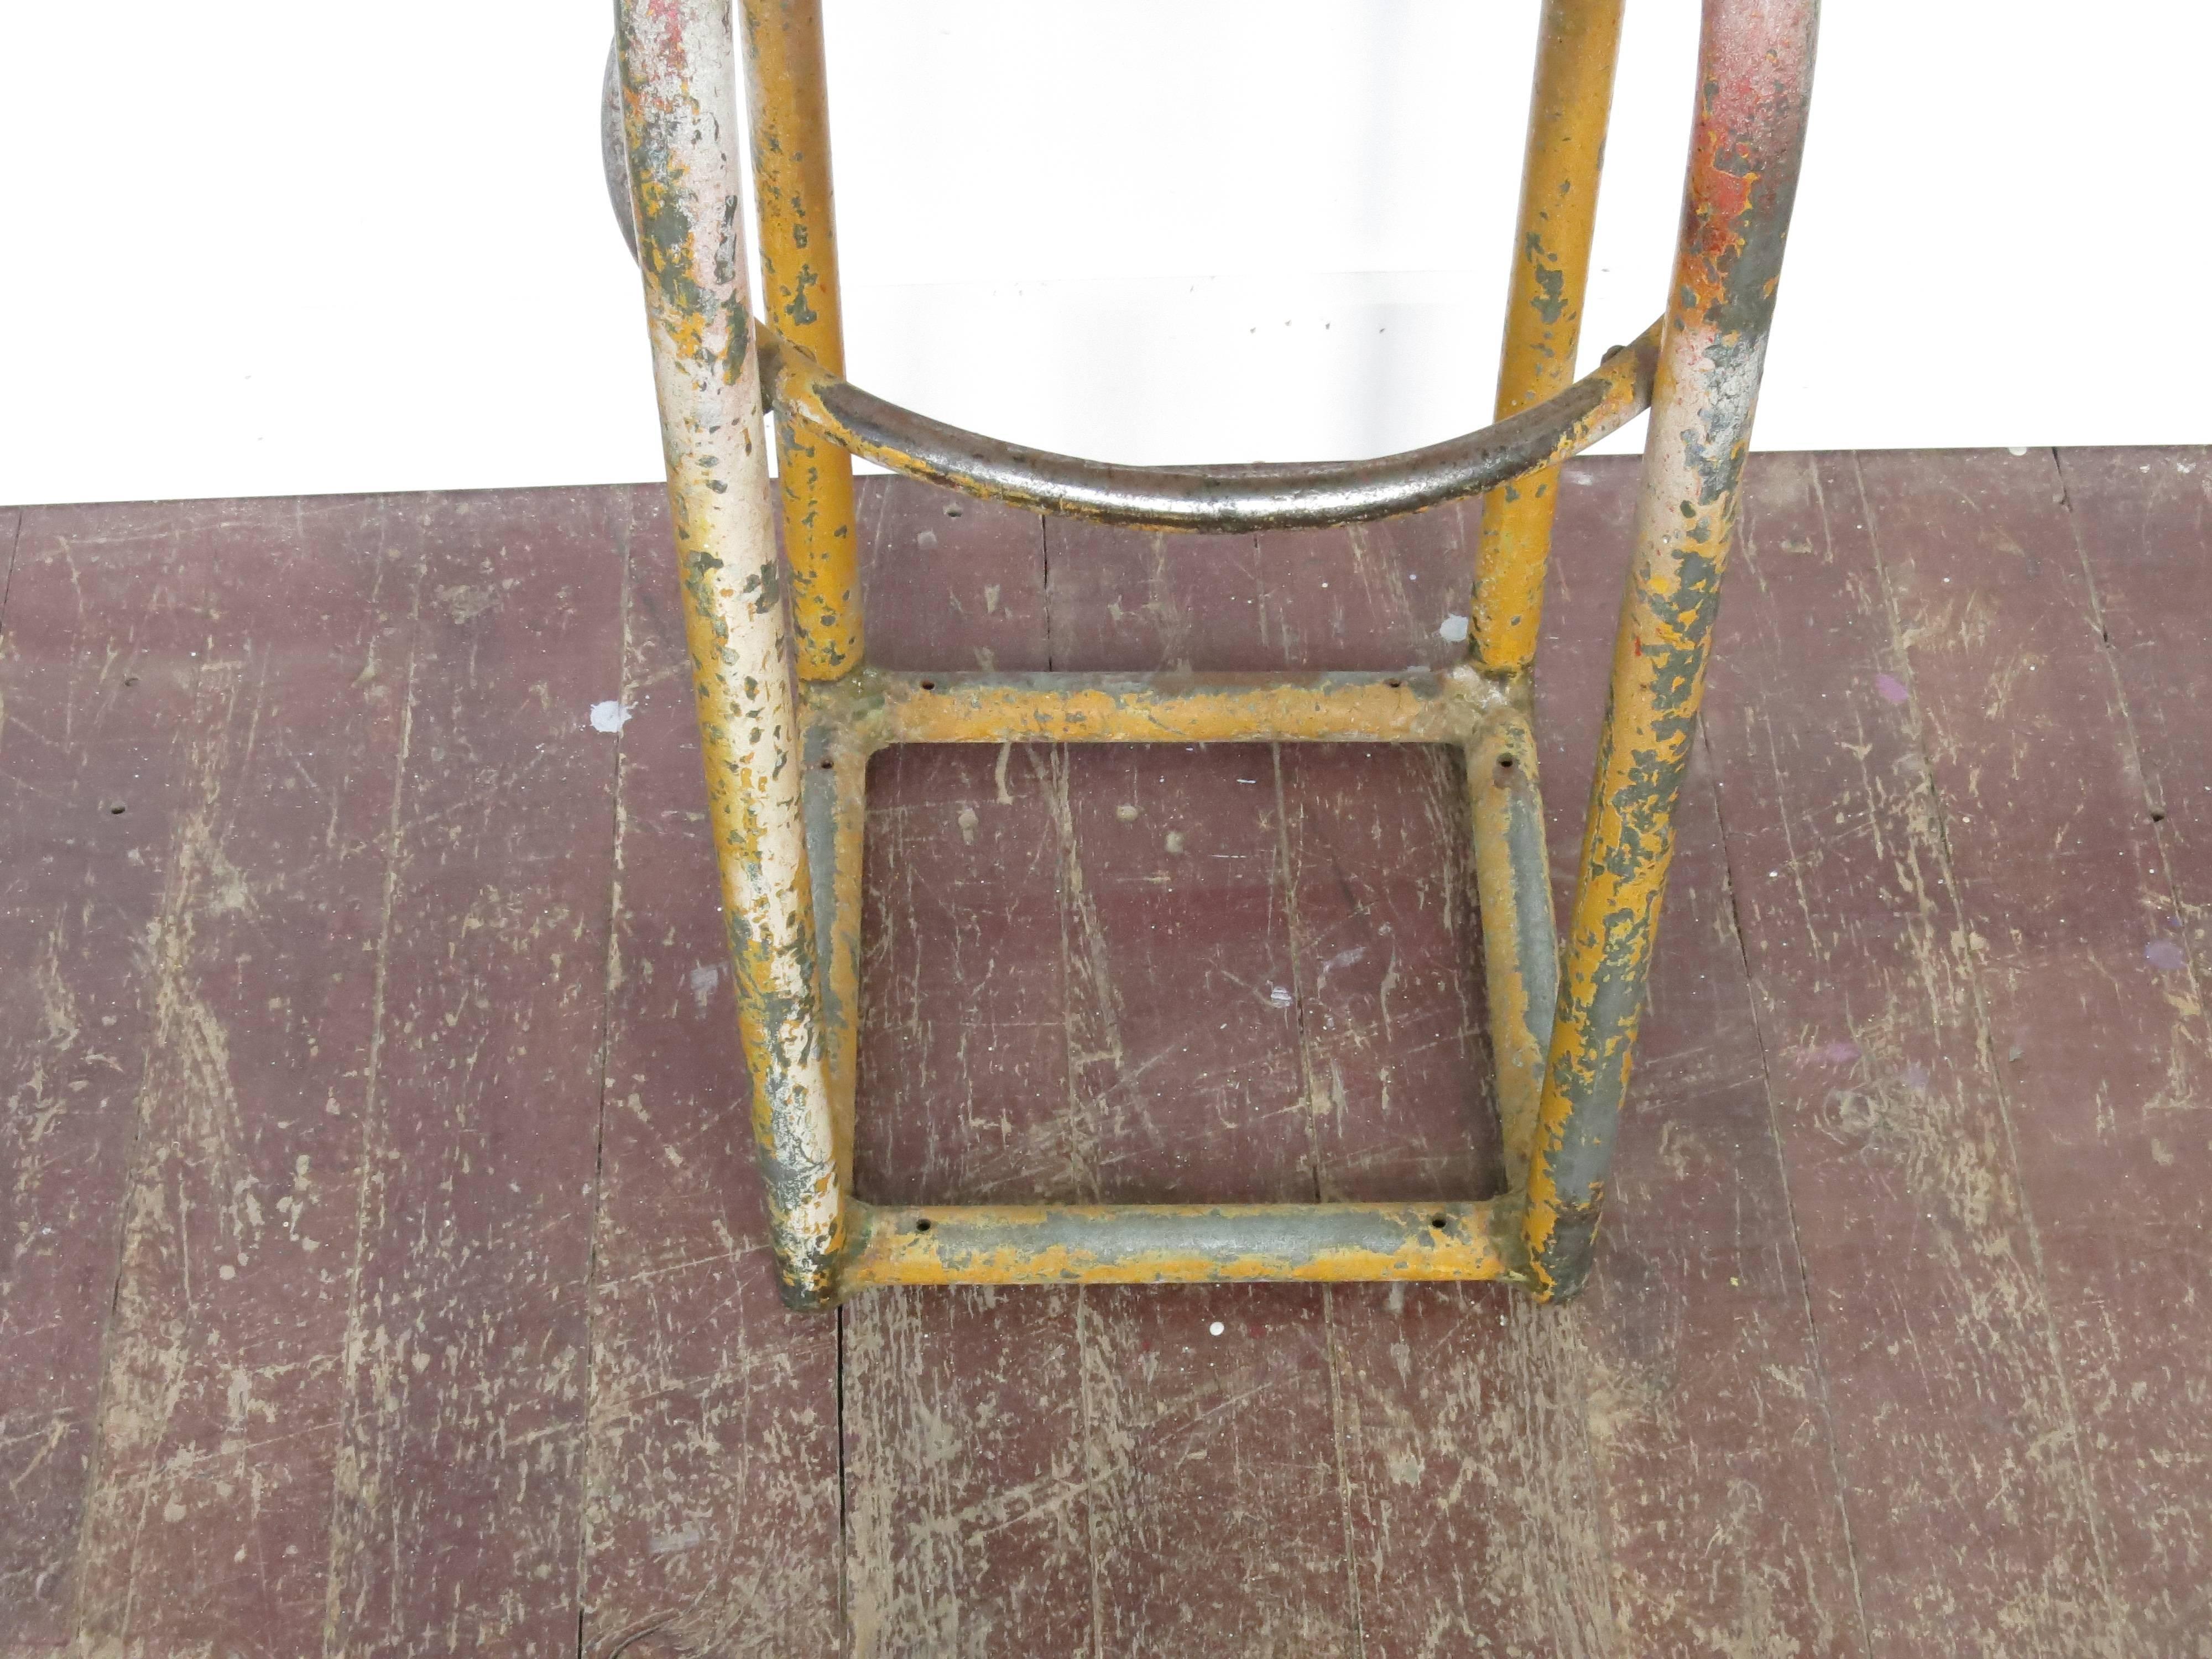 Vintage painted metal Industrial shop stool. The seat is 12